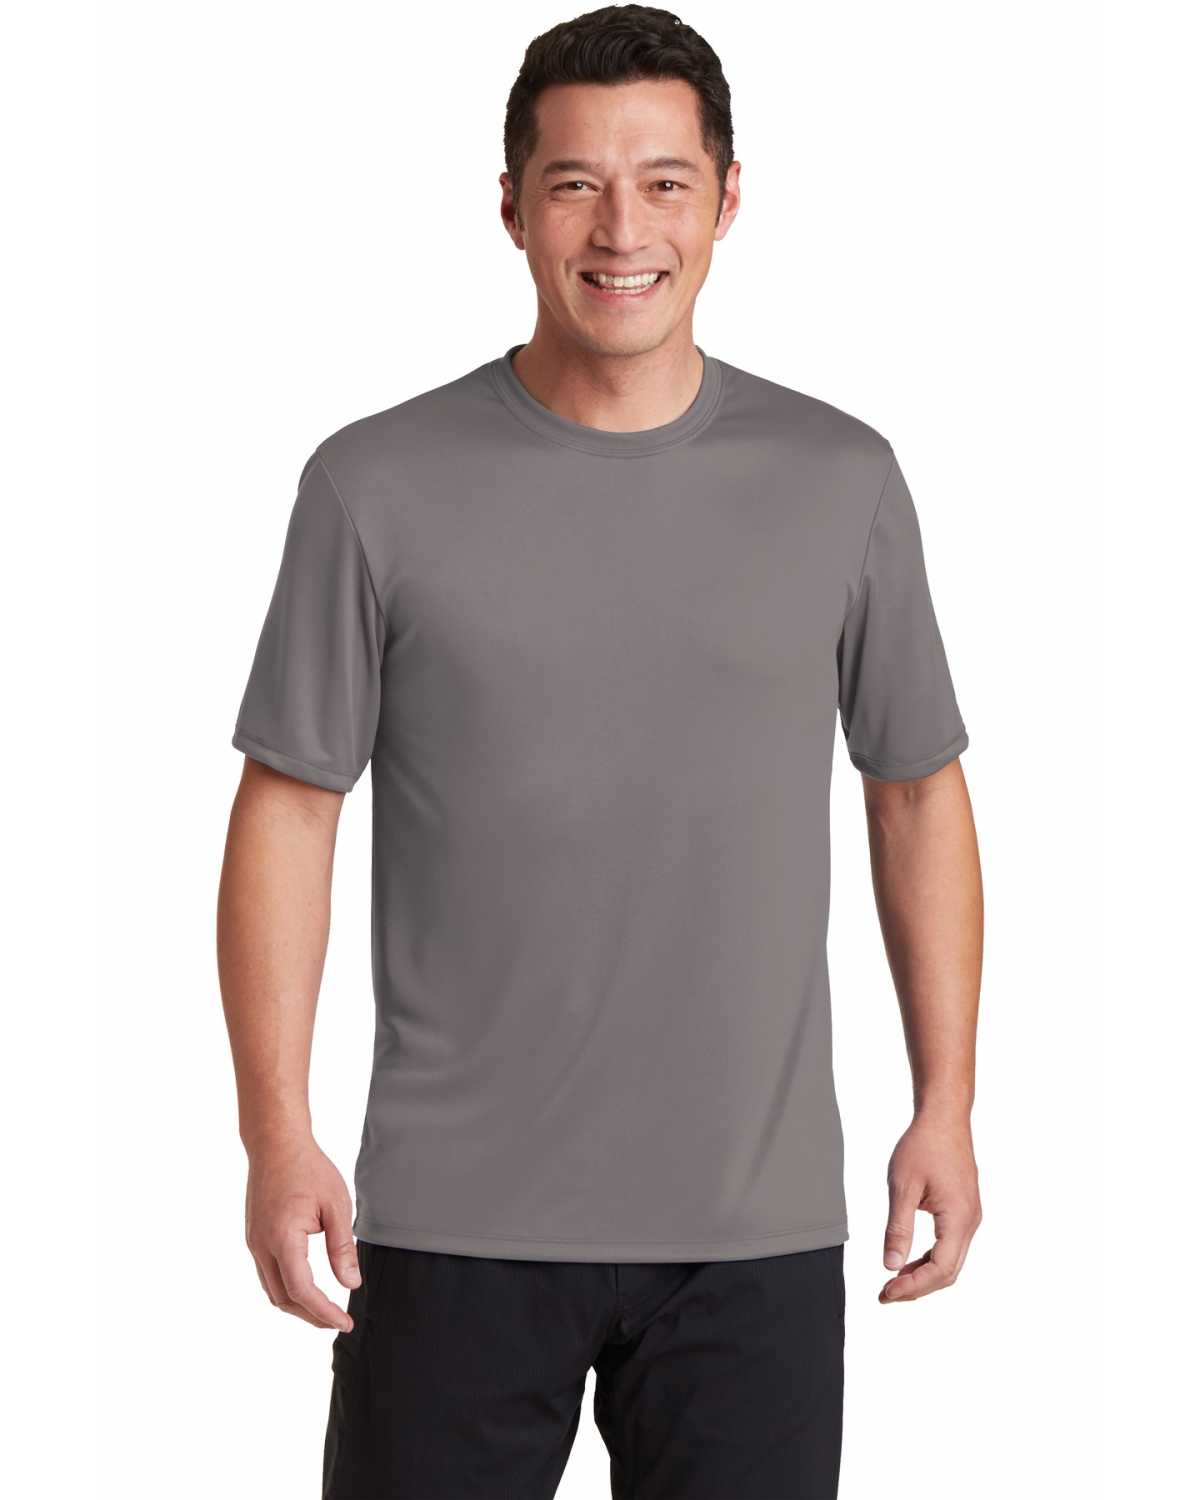 Hanes 4820 Cool Dri Performance T-Shirt on discount | ApparelChoice.com